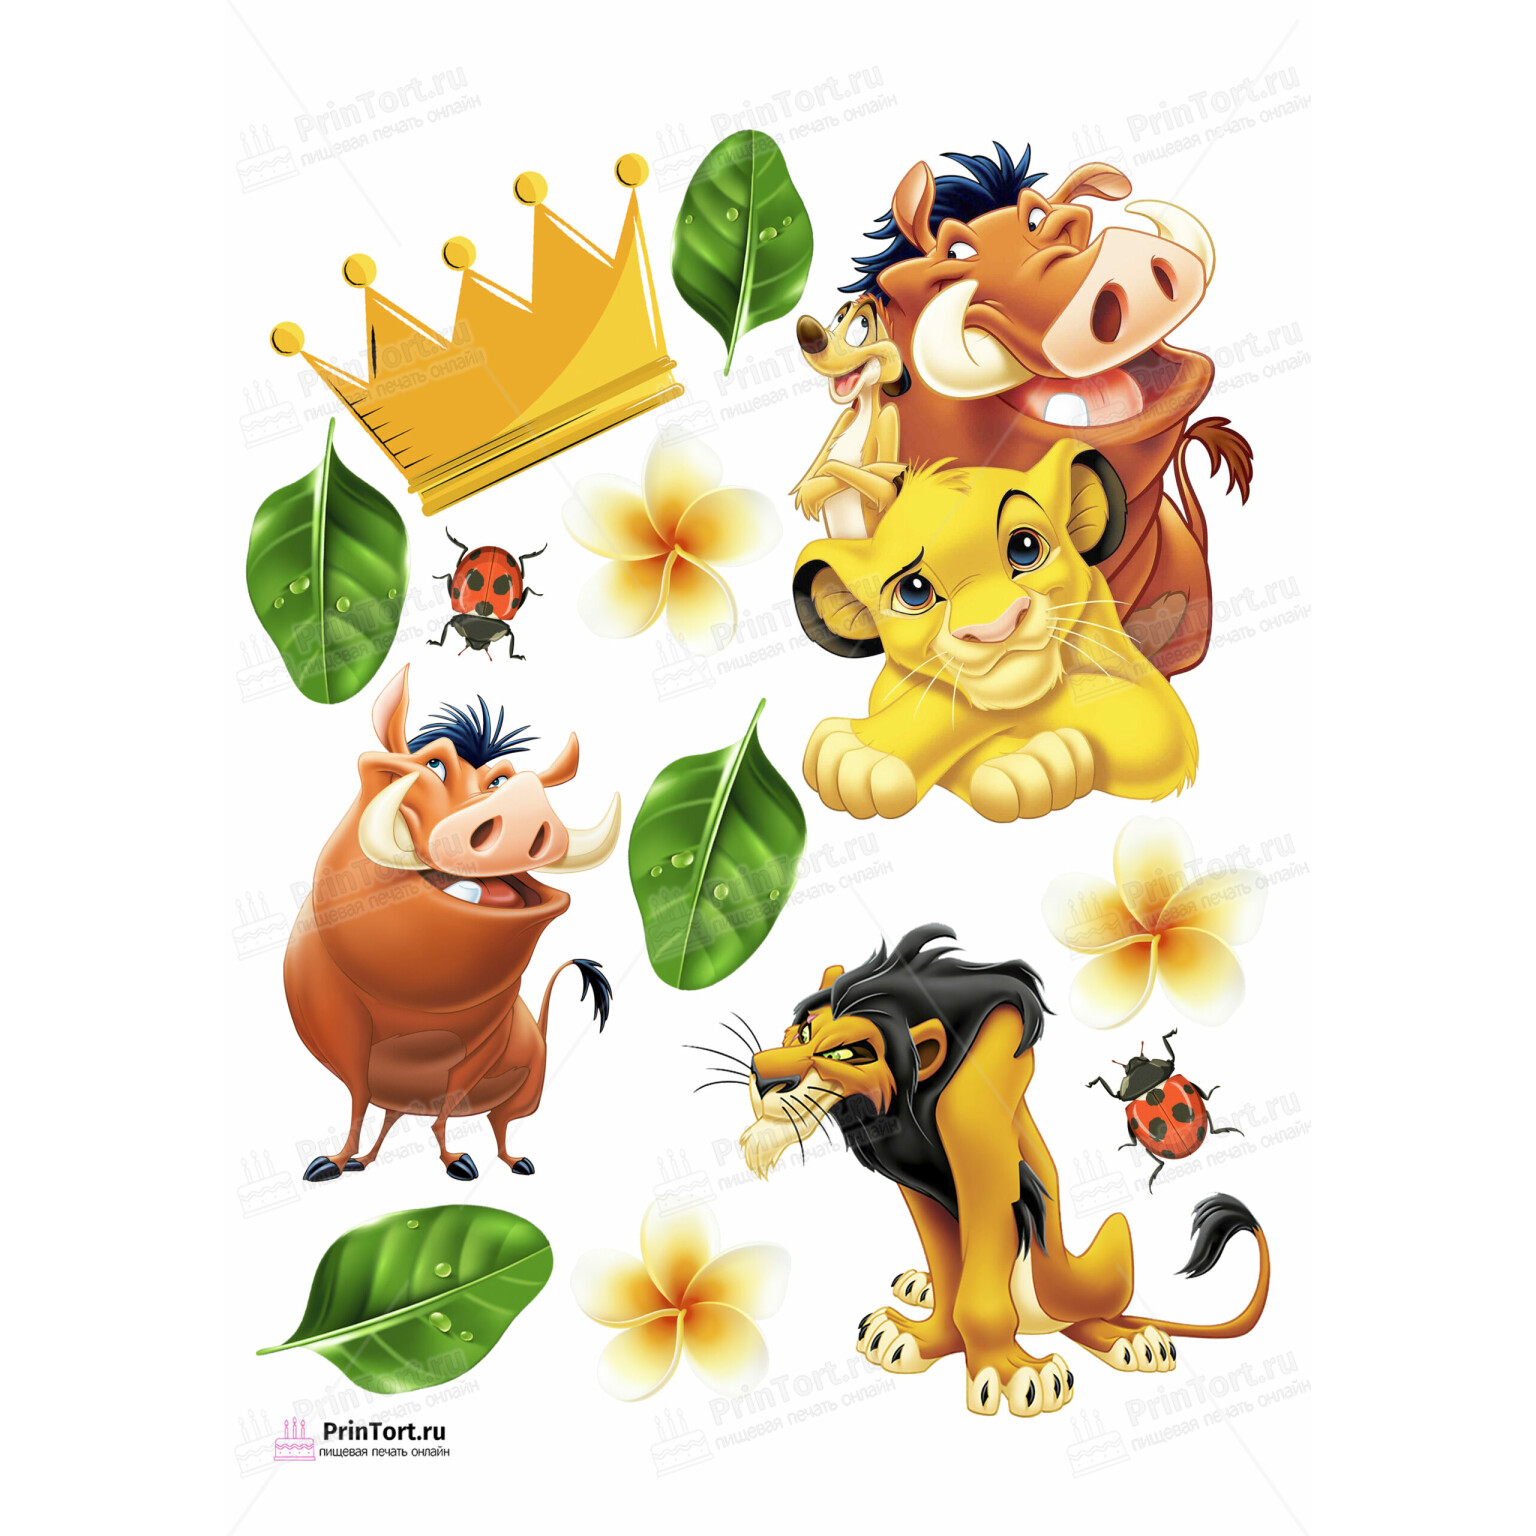 Король лев картинки для торта для печати